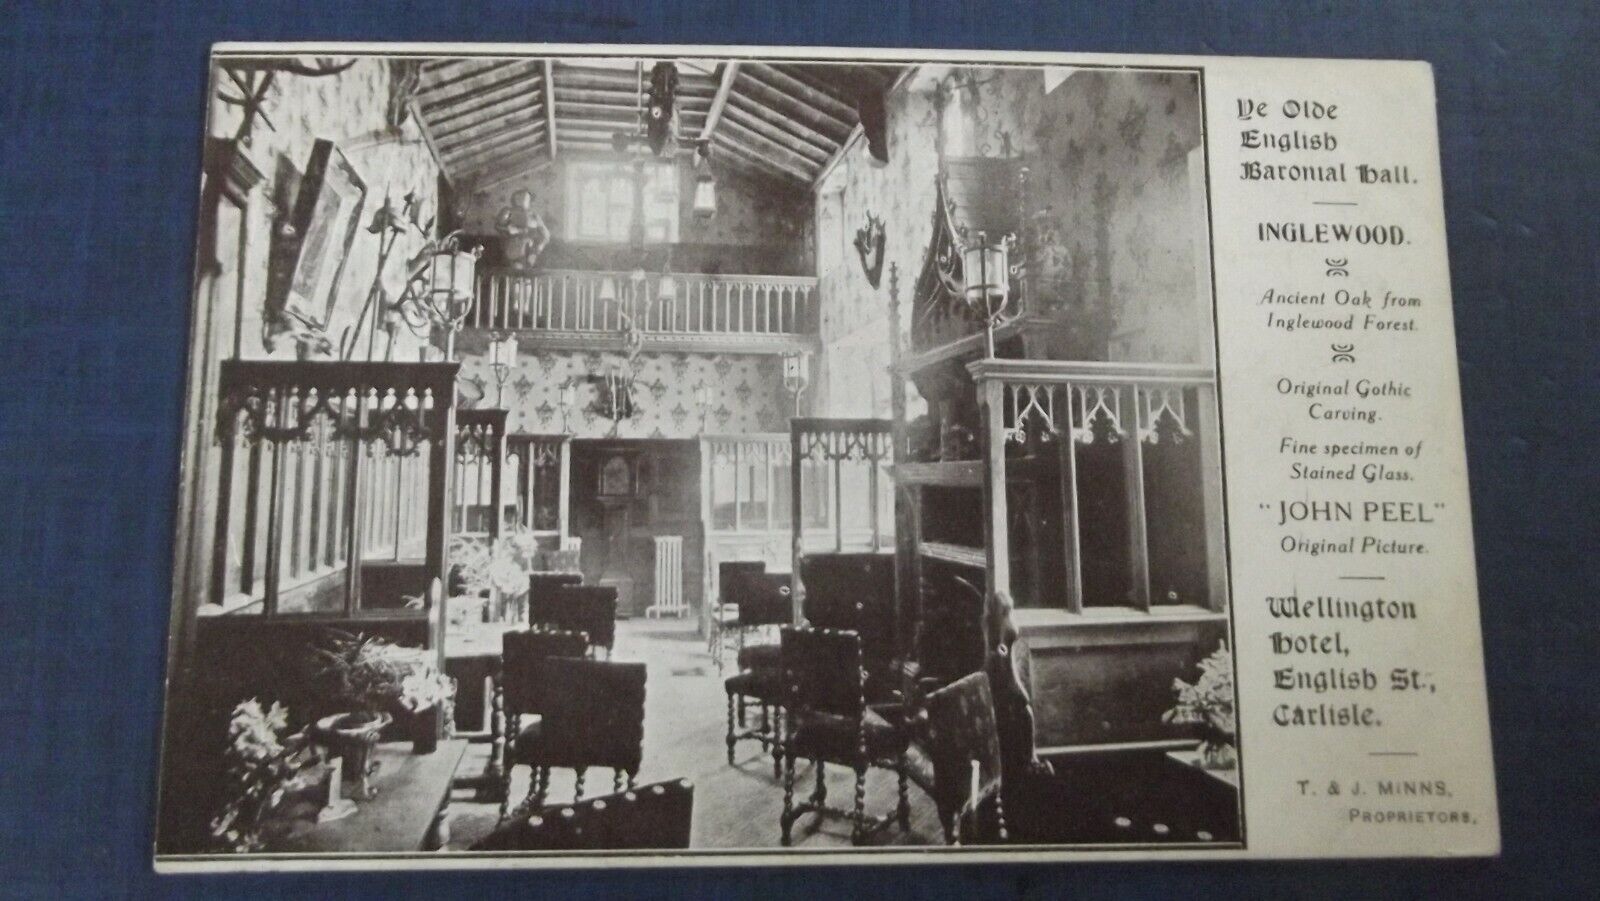 House Clearance - Carlisle Wellington Hotel English Baronial Hall  Service 1911 Postmark